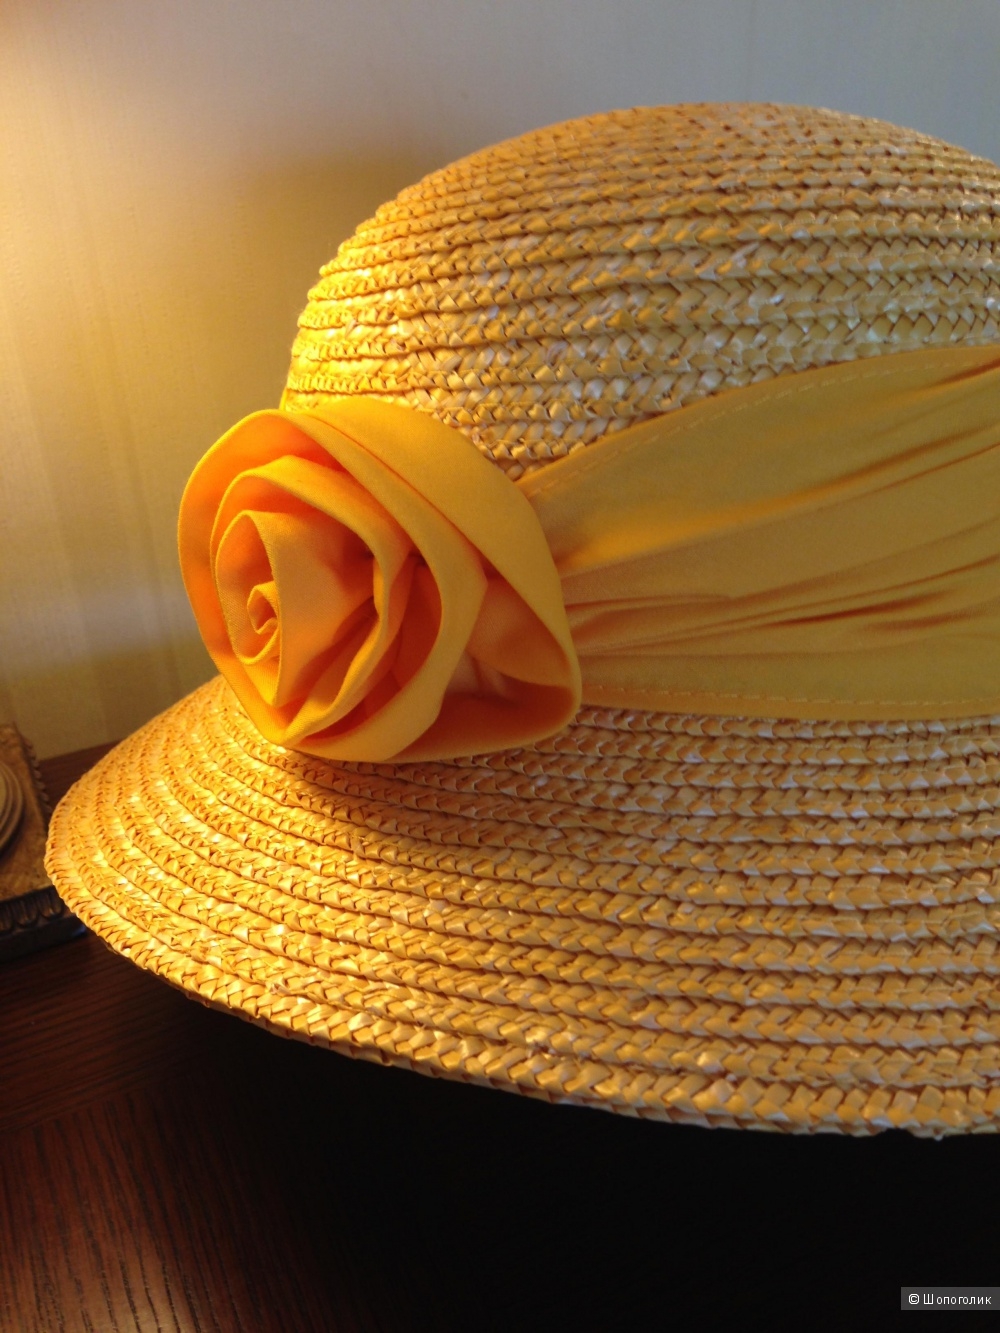 Соломенная шляпа 5. Соломенная шляпа Джейн Эйр. Seeberger шляпа соломенная мужская. Соломенная шляпа Селин. Соломенные шляпы 56р.